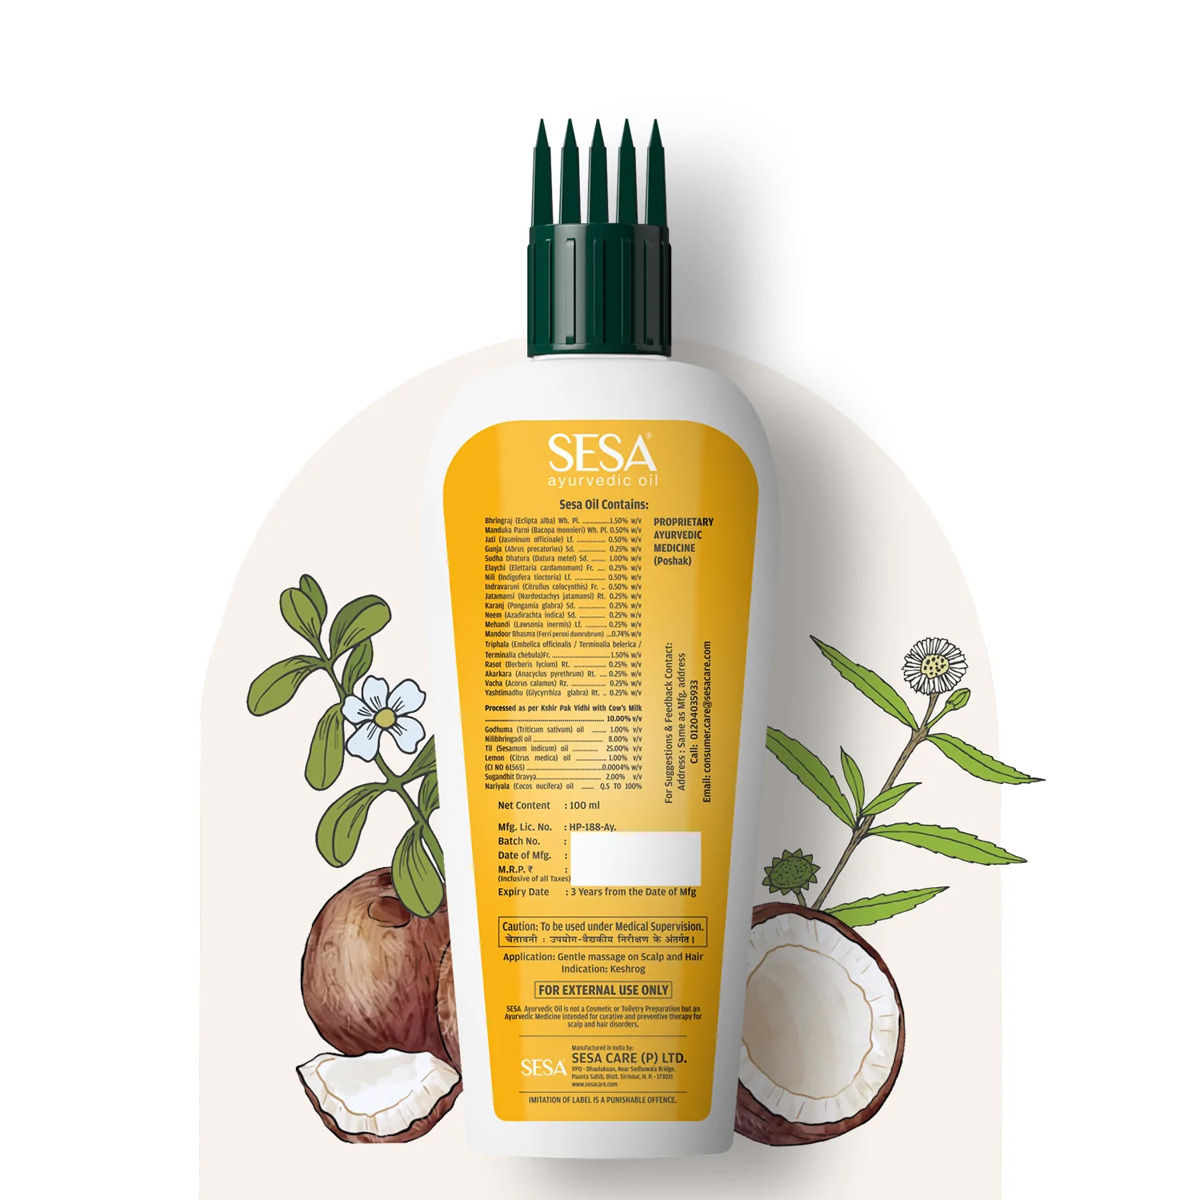 Sesa Ayurvedic Hair Oil, 100 ml Price, Uses, Side Effects, Composition -  Apollo Pharmacy